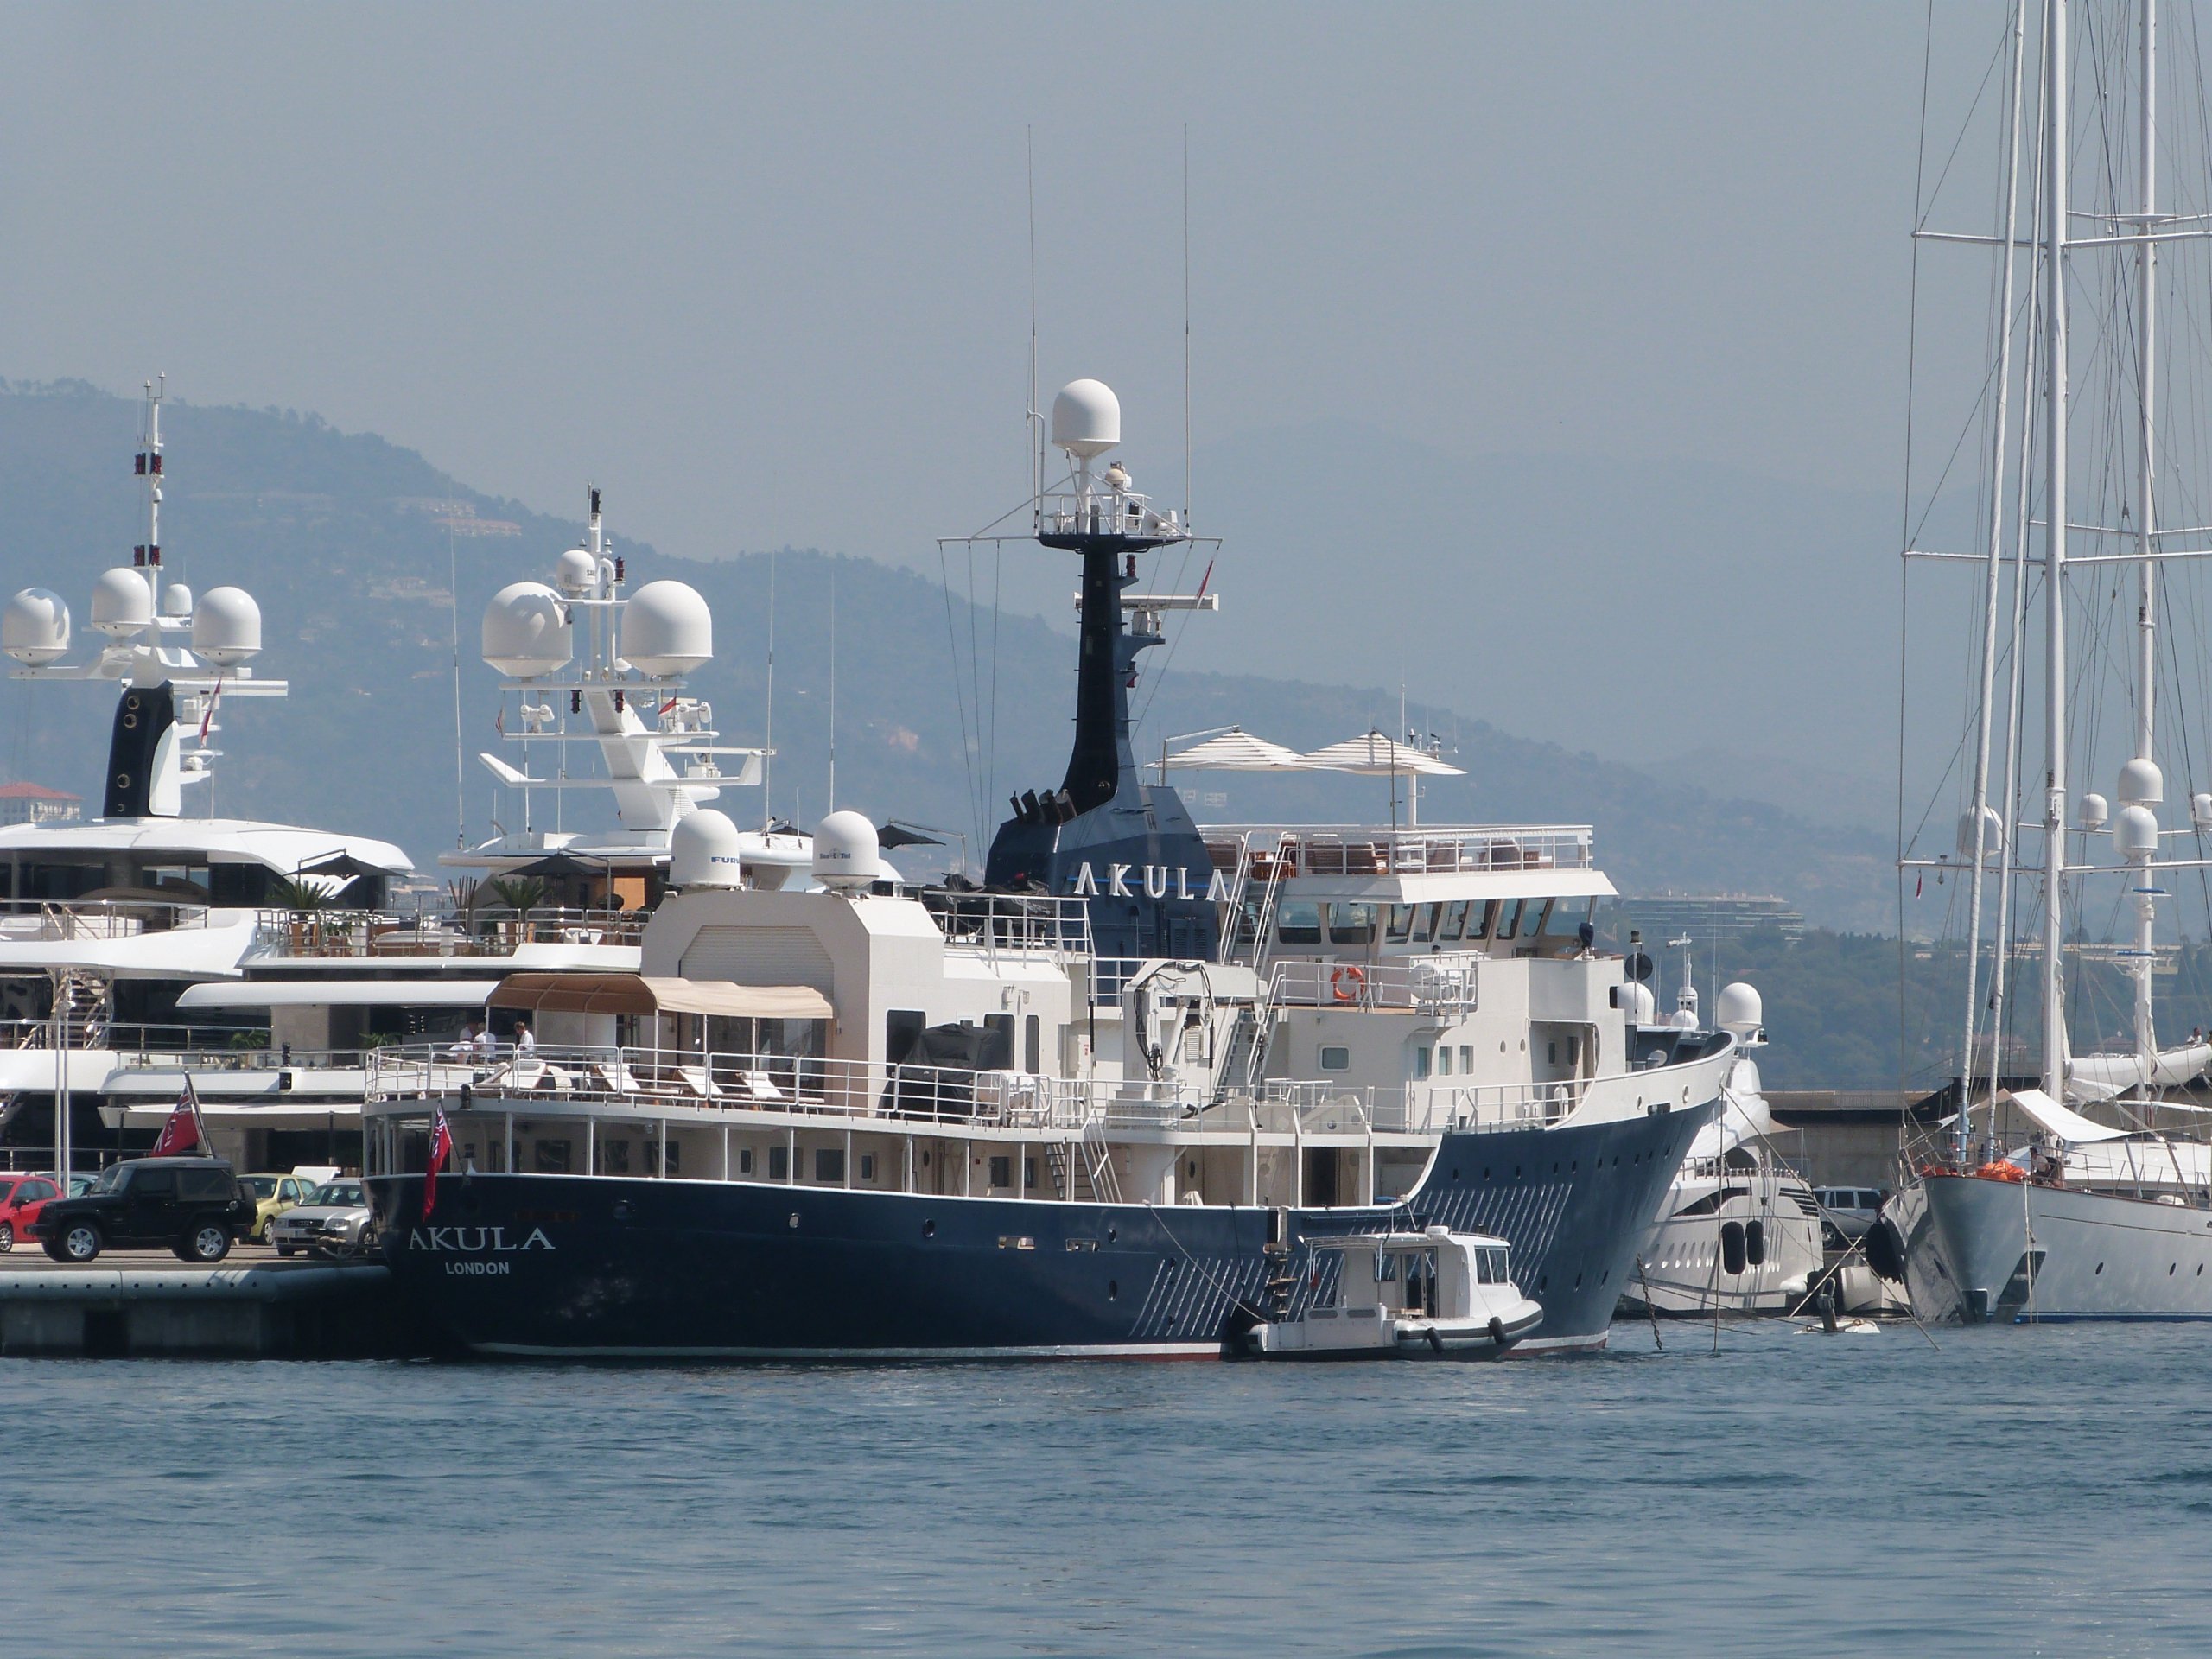 OMNIA Yacht • Jonathan Faiman $15M Superyacht • Amels • 2008